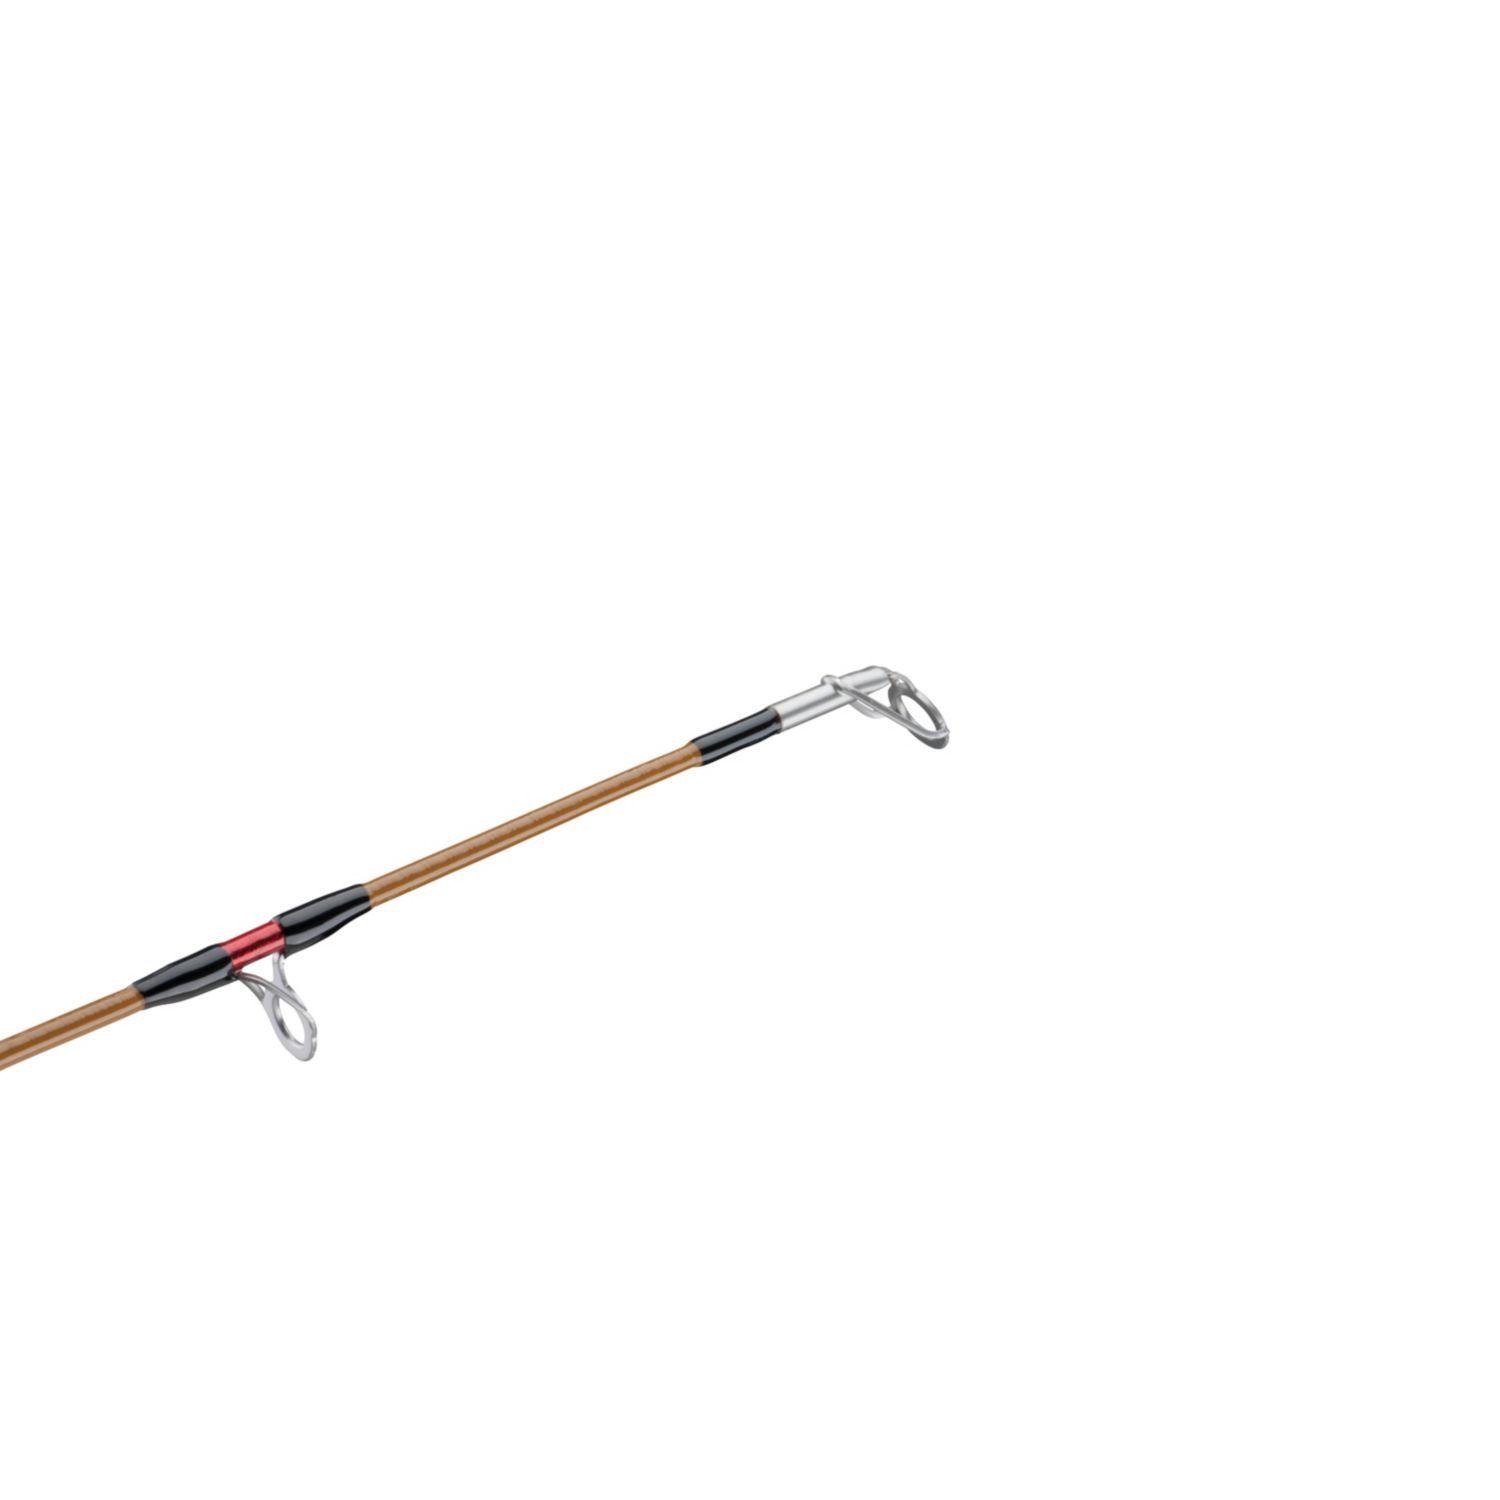 UGLY STIK 7'LIGHTWEIGHT Spinning Rod Two Piece Medium Fishing Rod